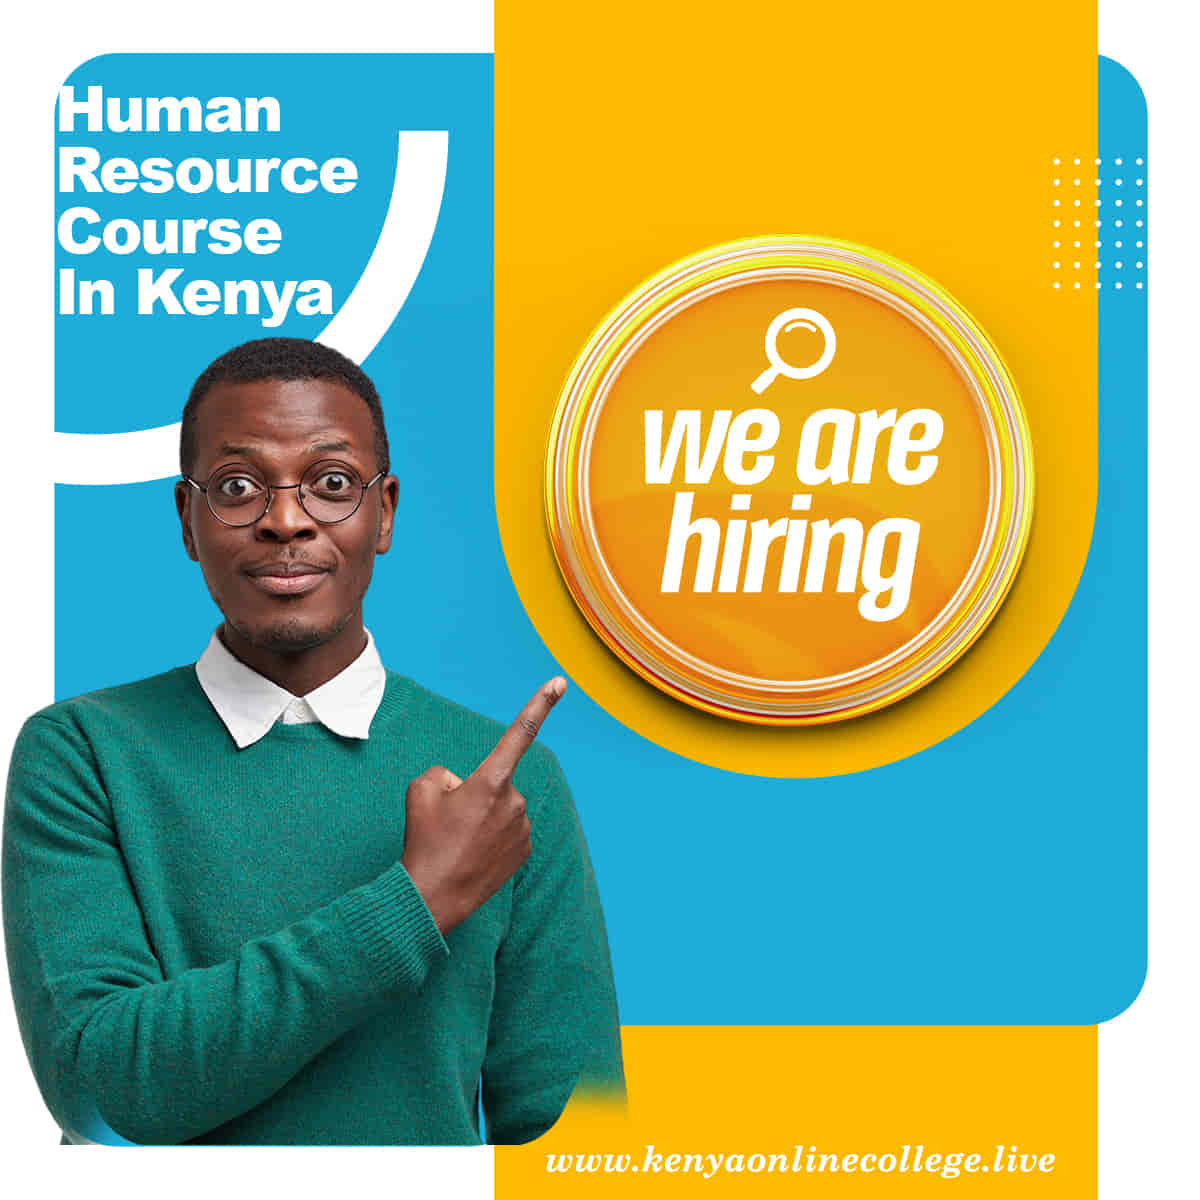 Human resource course in Kenya